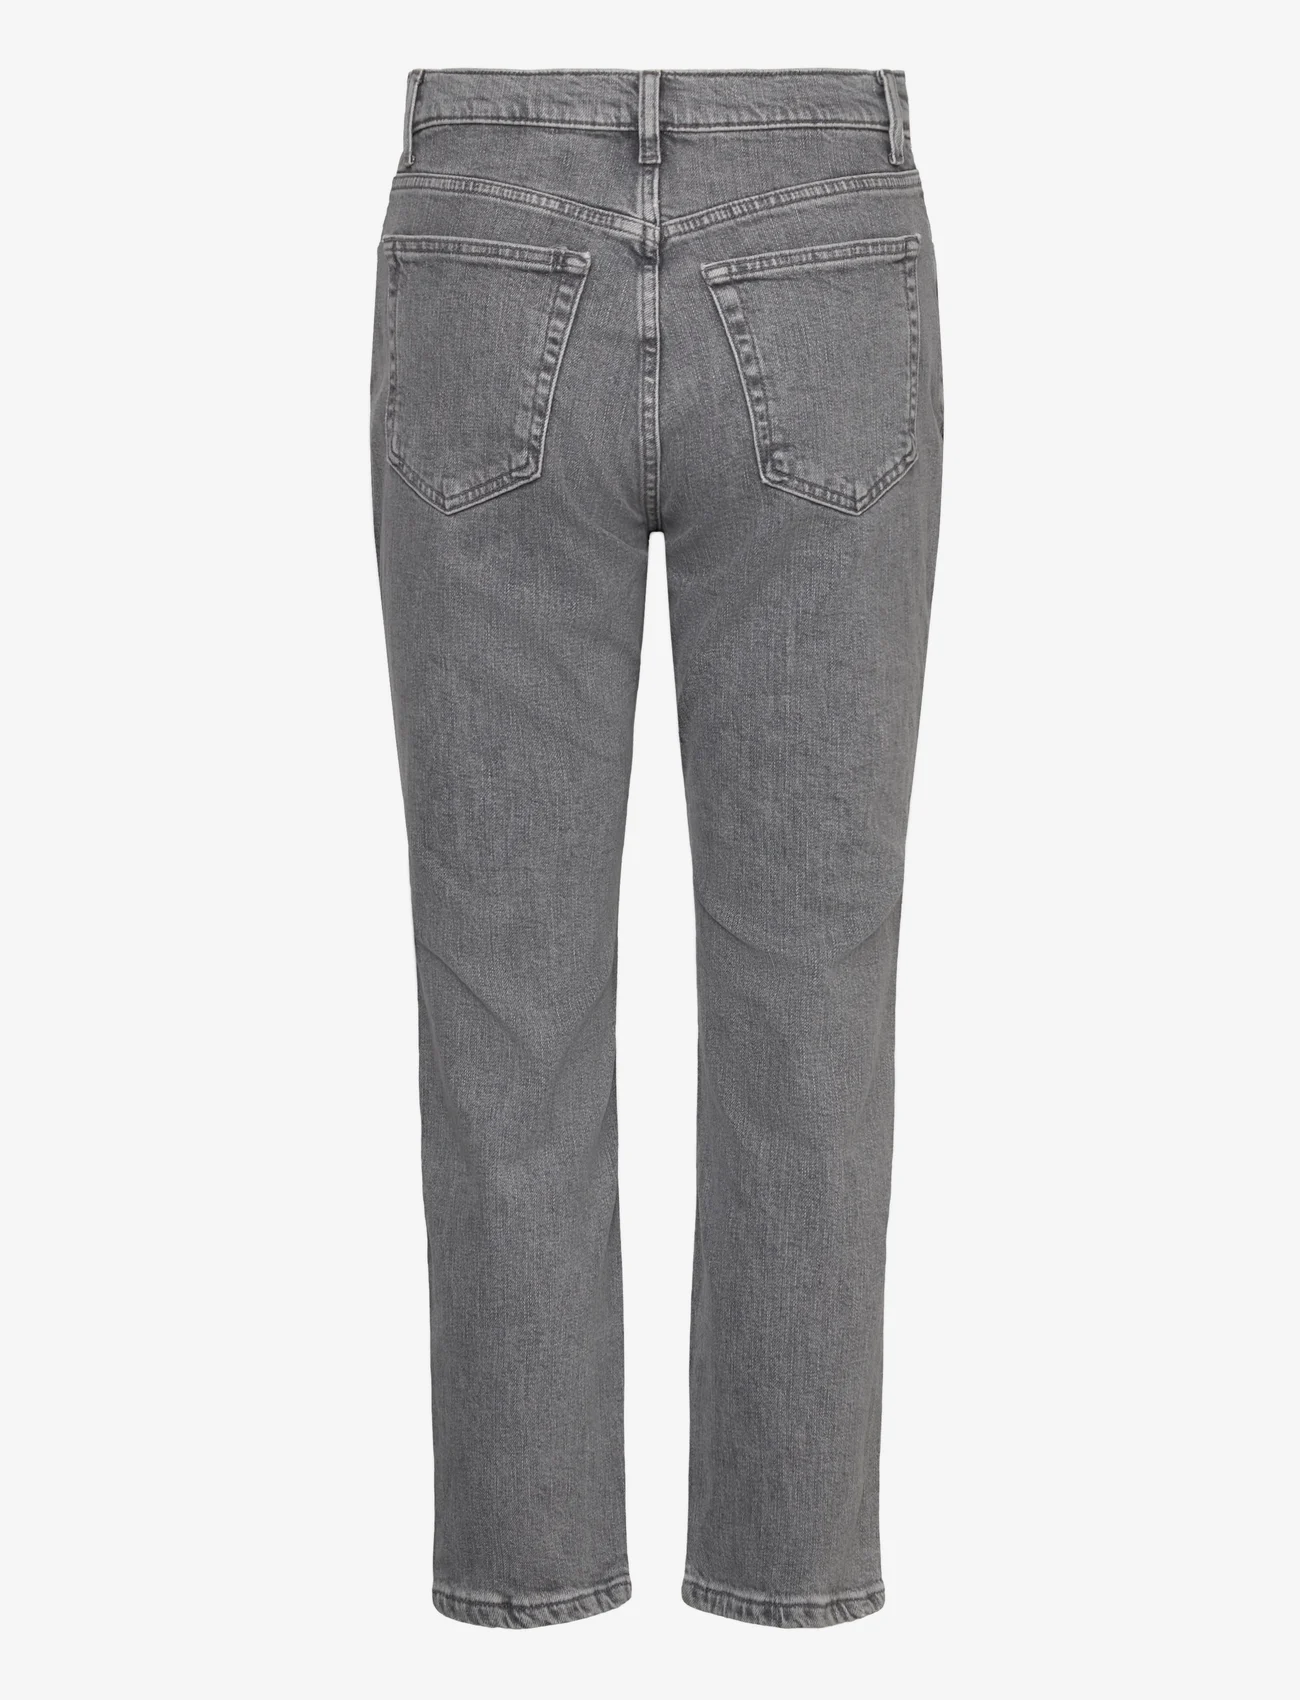 Mango - Slim cropped jeans - raka jeans - open grey - 1